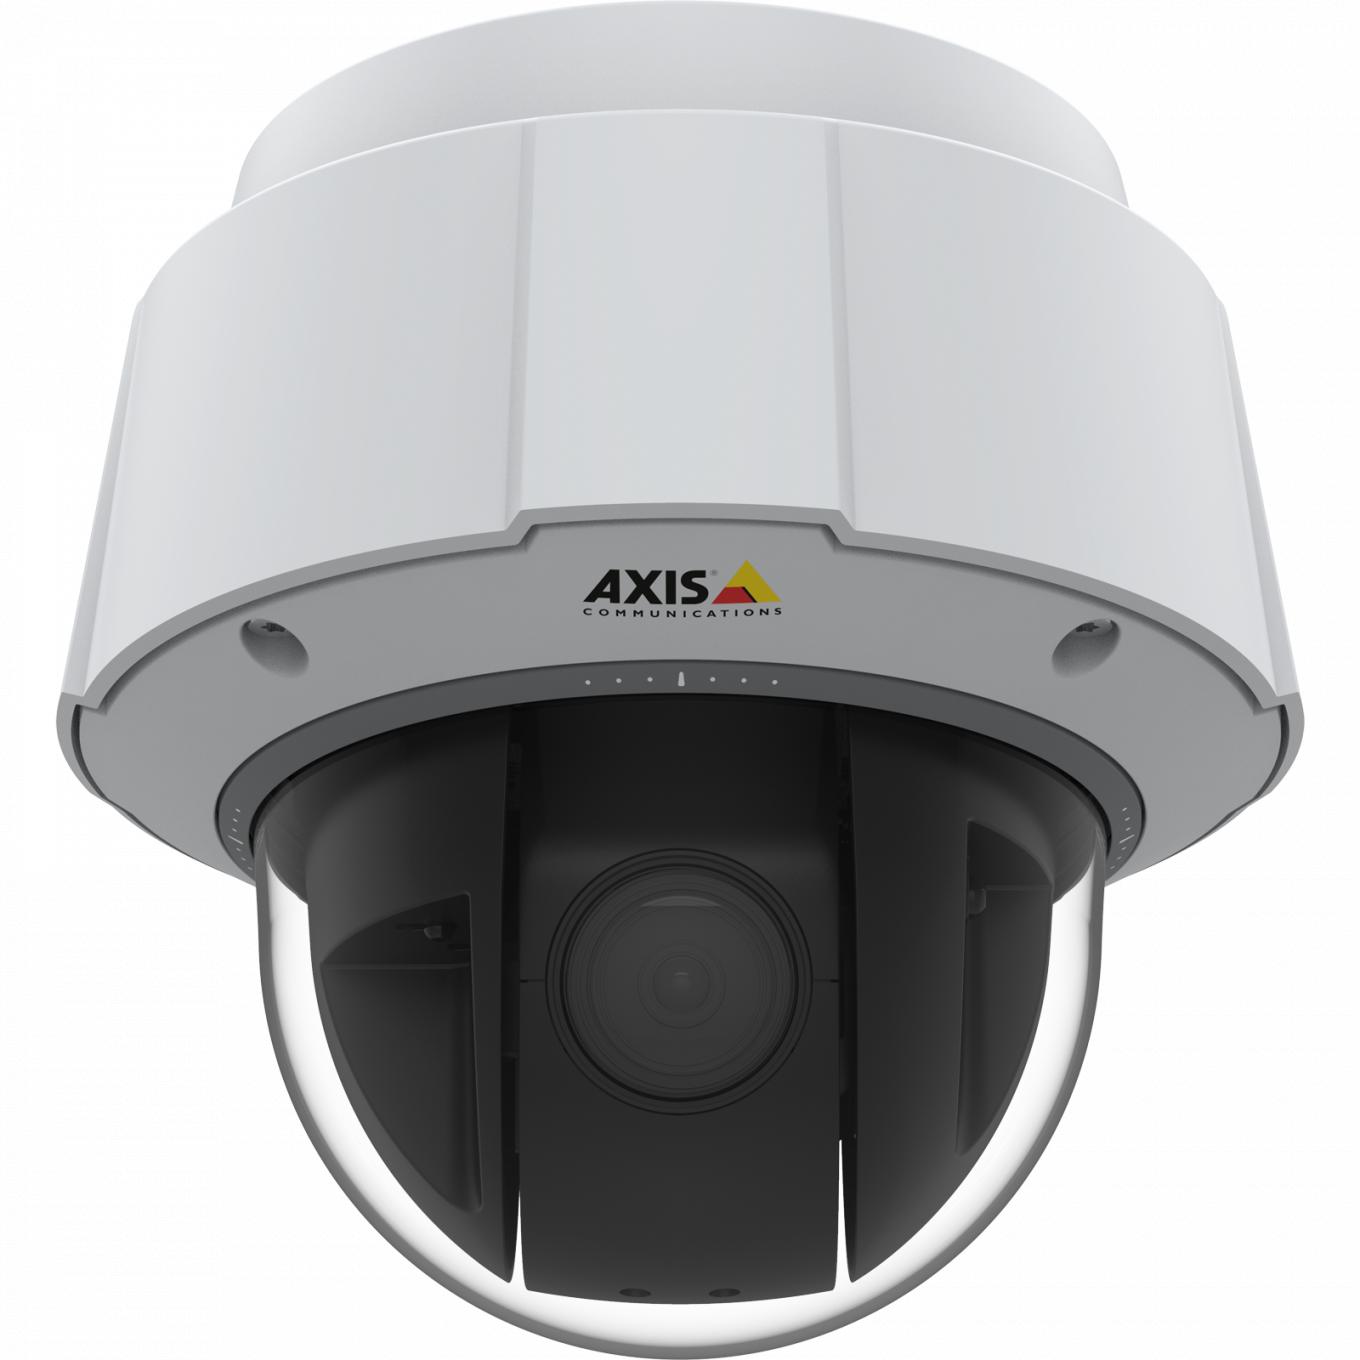 IP Camera AXIS q6075-e는 TPM, FIPS 140-2 level 2 인증을 받았습니다. 이 카메라는 전면에서 본 것입니다.